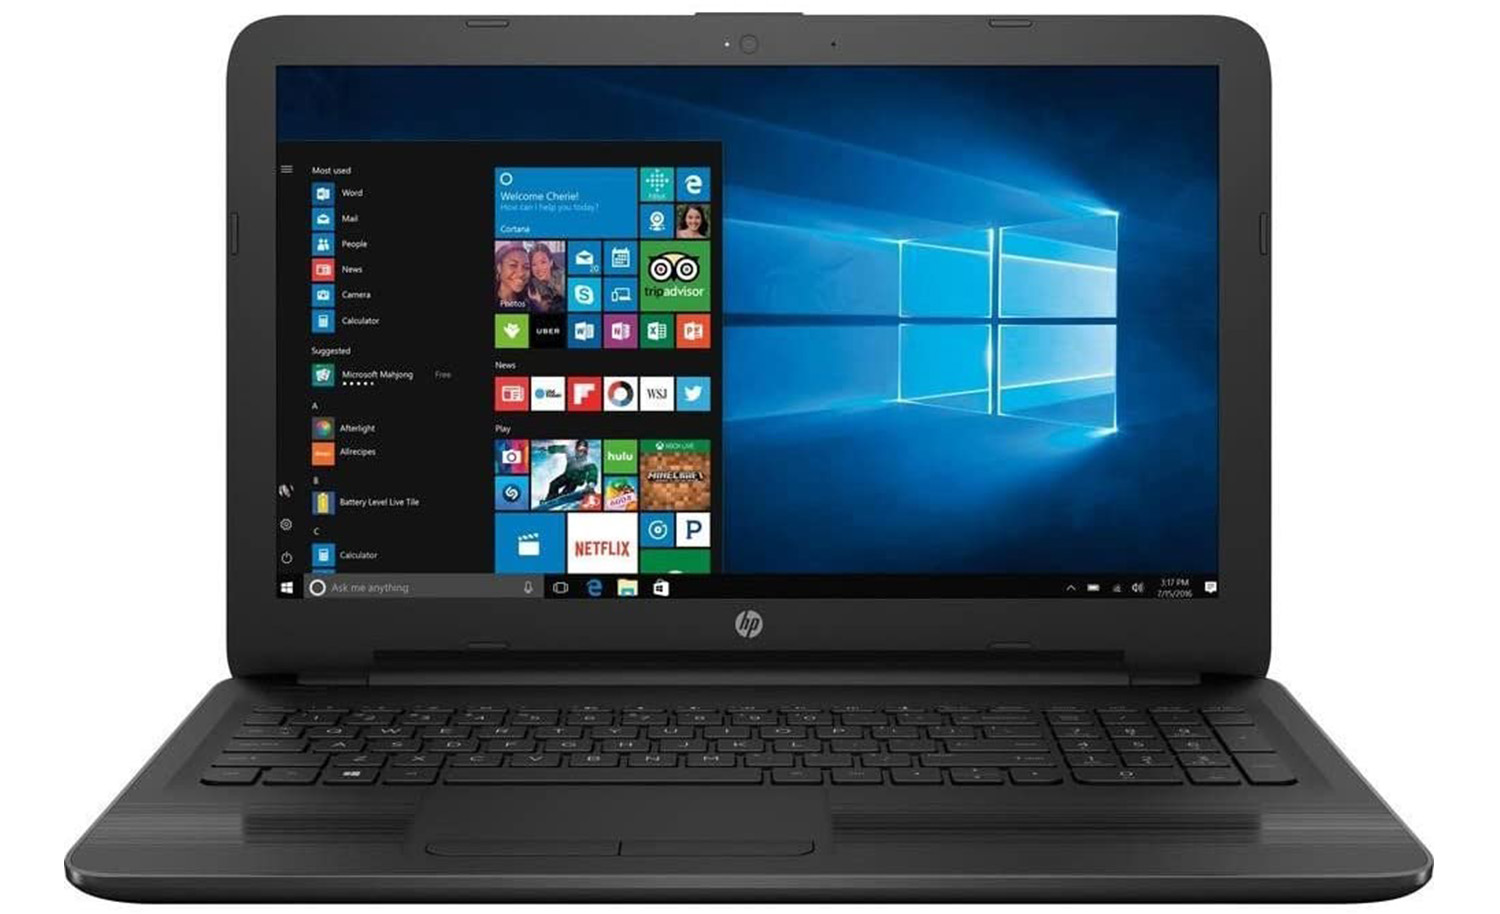 HP Notebook 15 Ay103dx Intel Core i5 7th Gen 8GB RAM 1TB HDD Windows 10 Pro